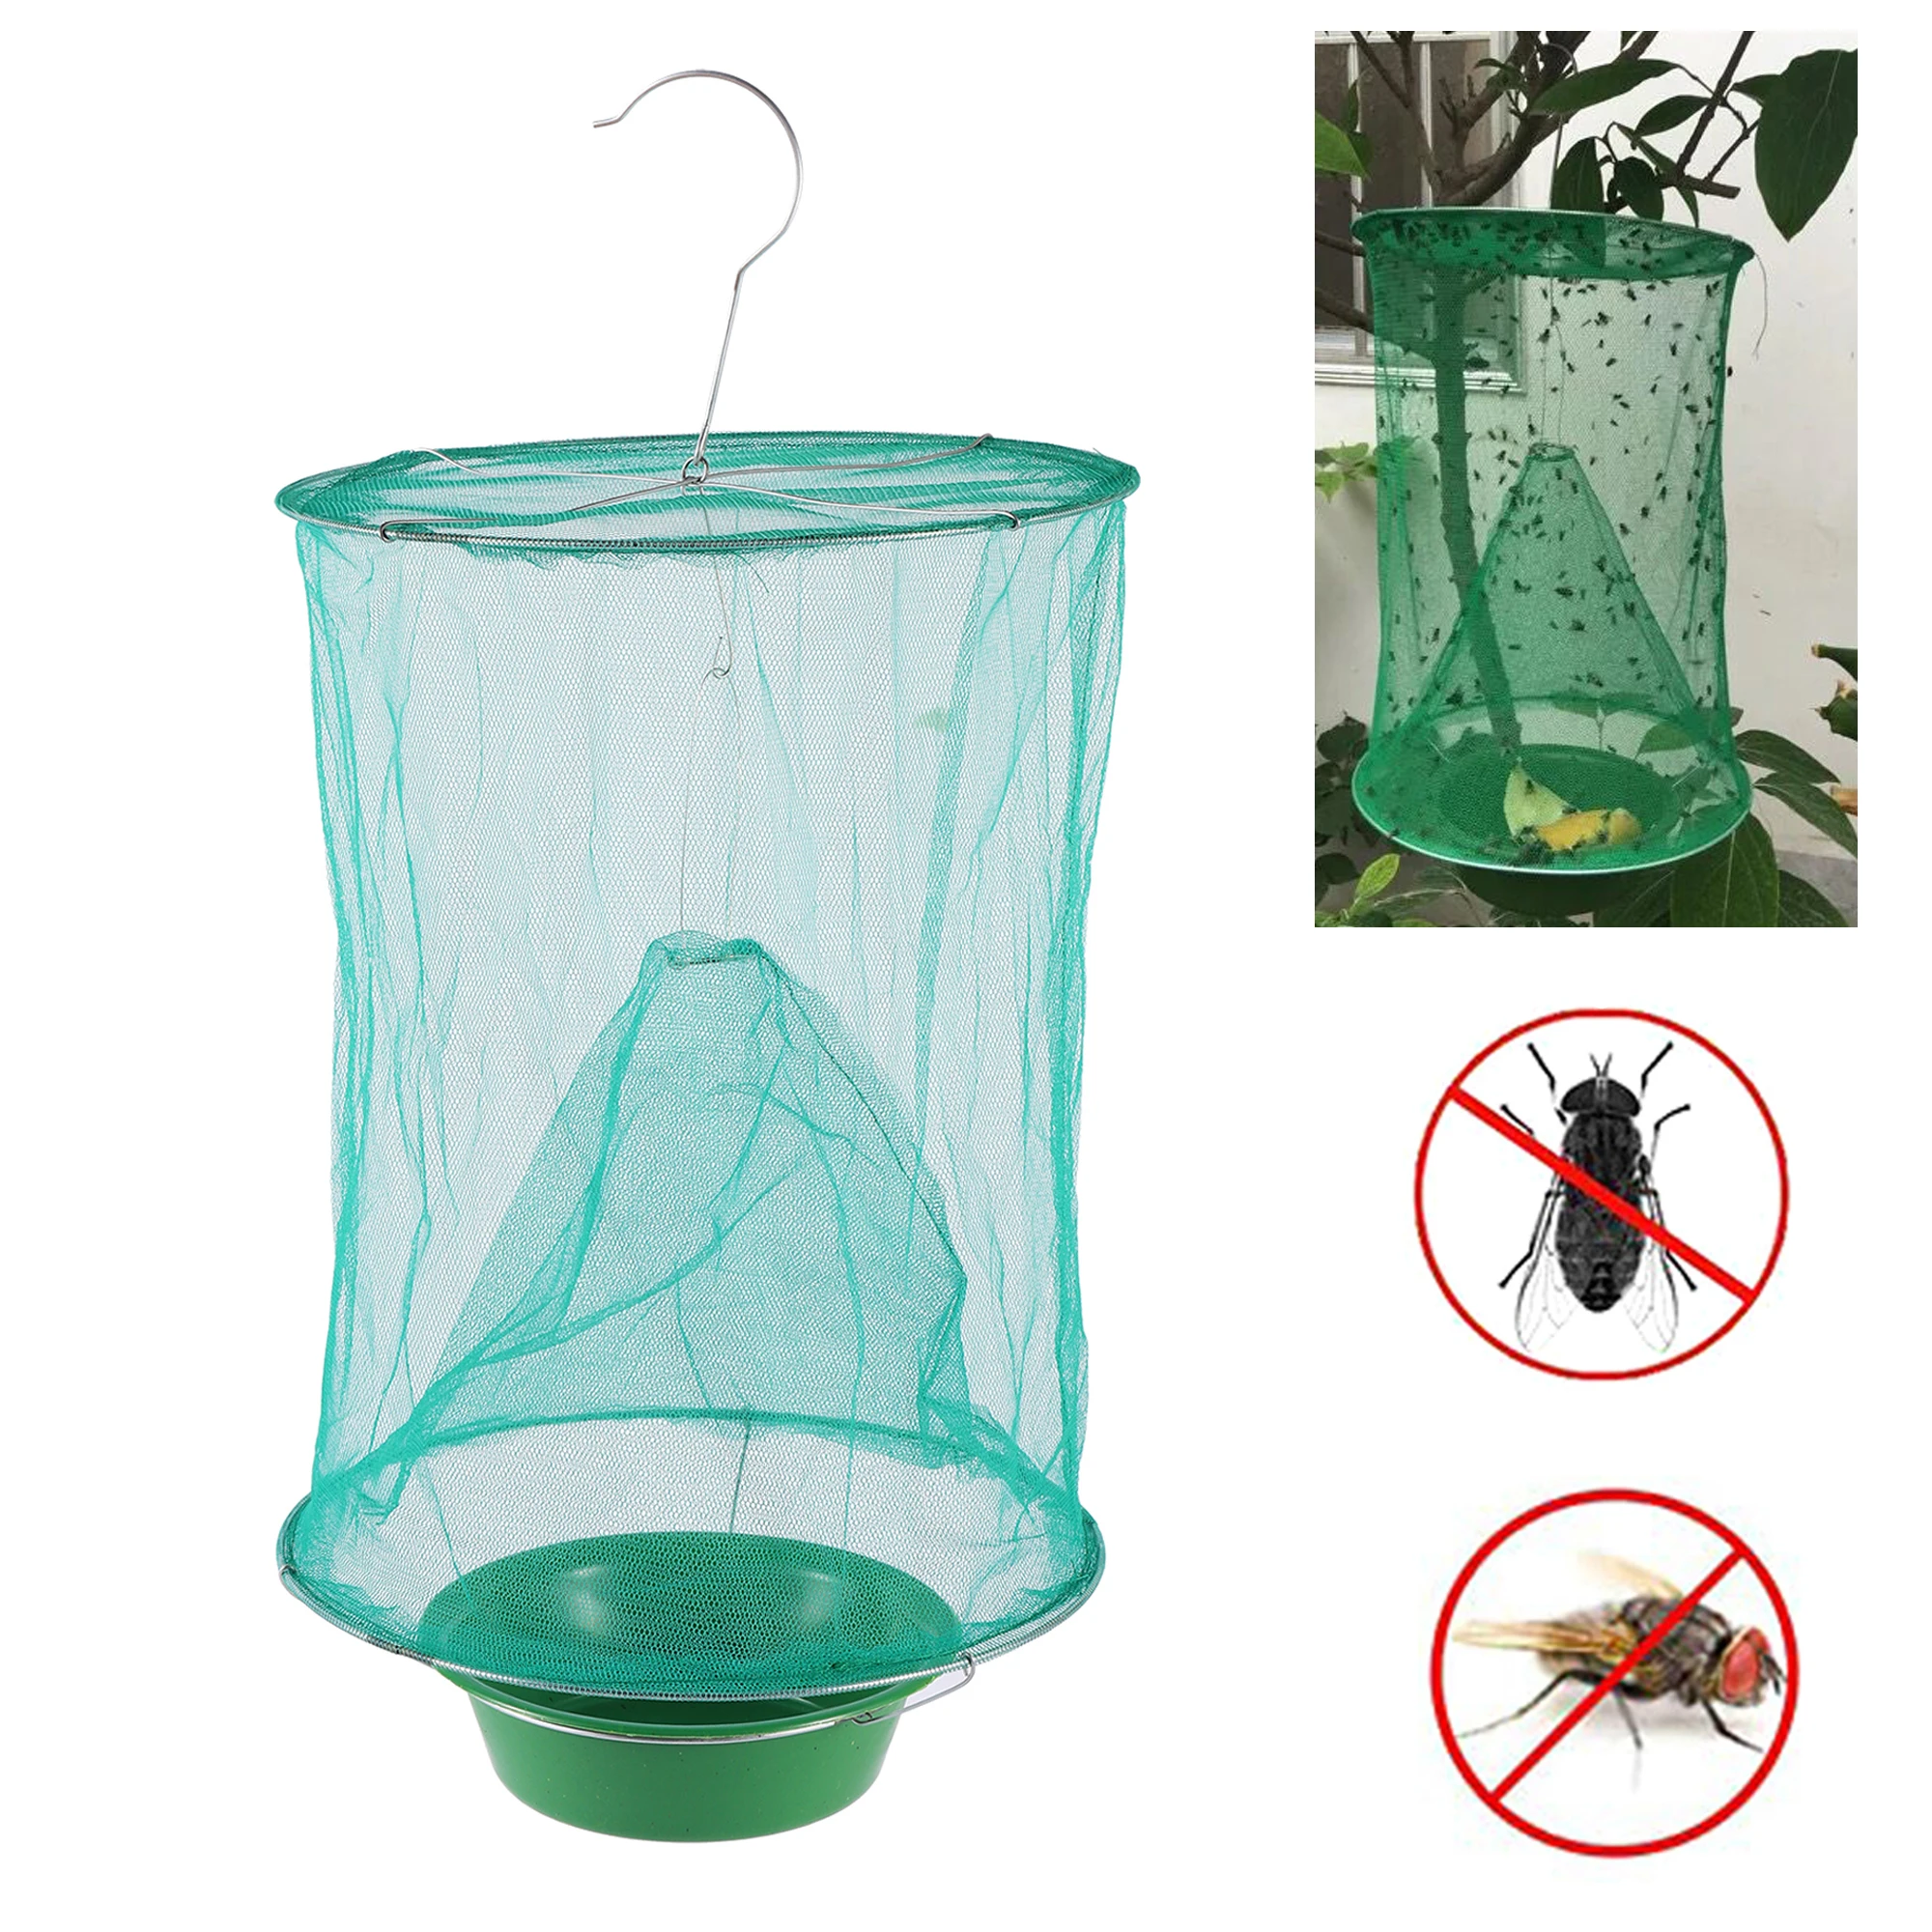 https://ae01.alicdn.com/kf/S7a2e6a46265d493bac8bd39d1f2de32e2/Fly-Catcher-Flies-Bugs-Pest-Trap-Reusable-Hanging-Flytrap-Net-Cage-Garden-Ranch-Farm-Outdoor-Foldable.jpg